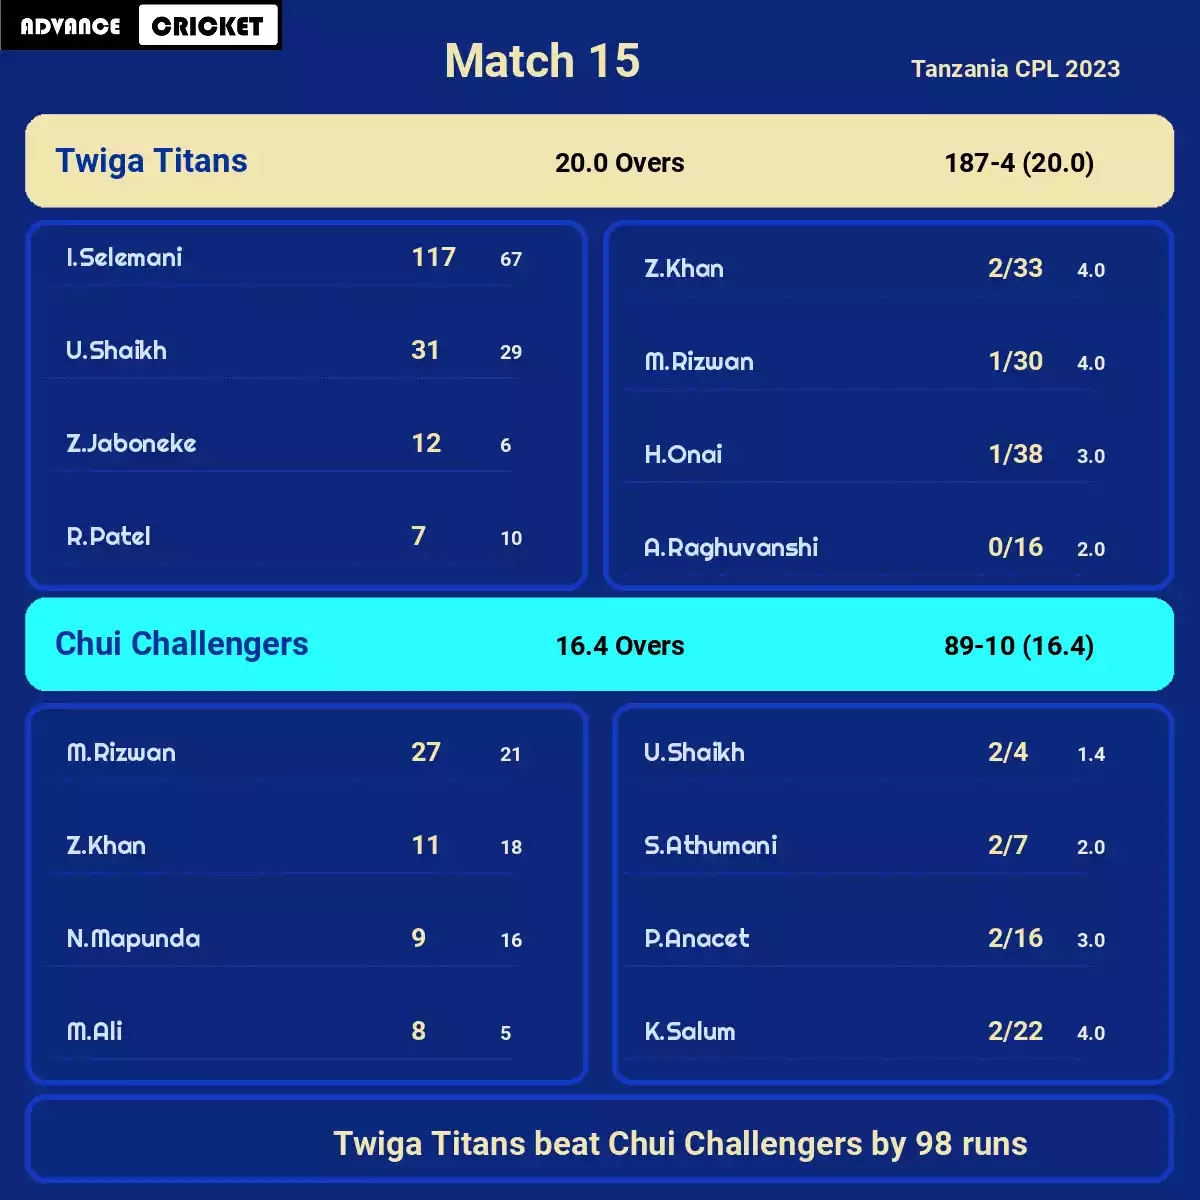 TWT vs CC Match 15 Tanzania CPL 2023